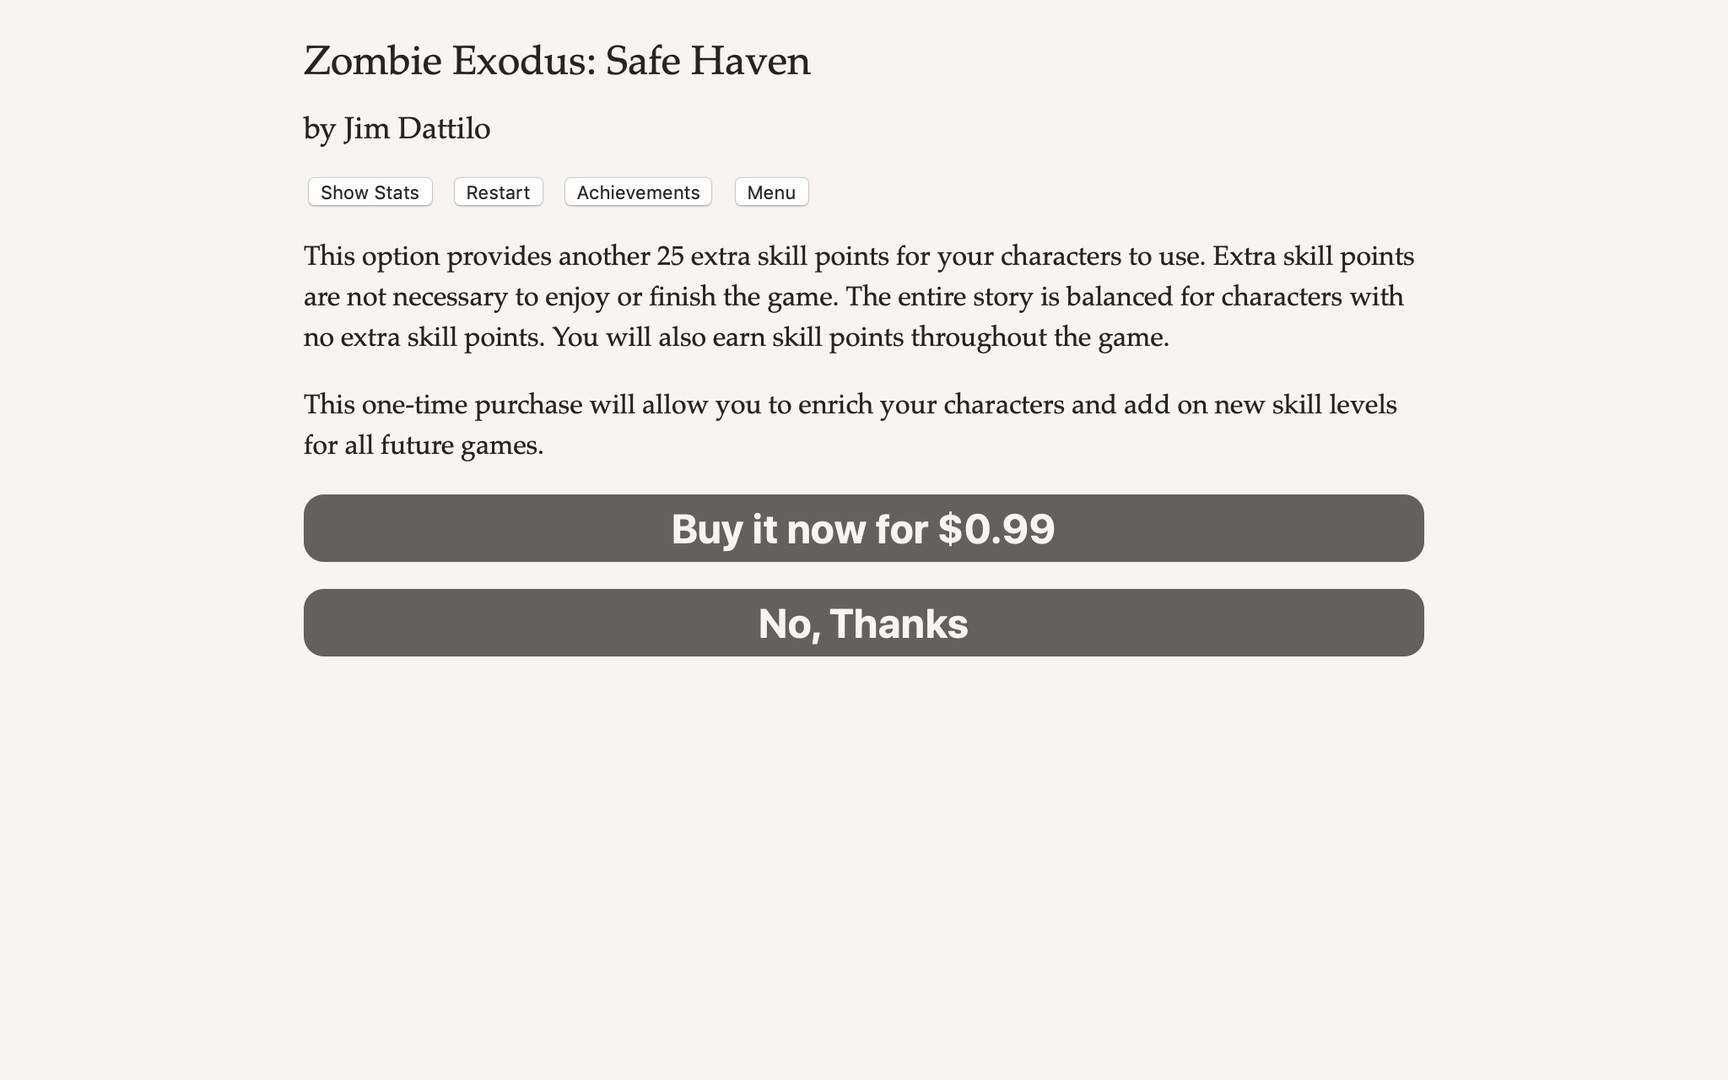 Zombie Exodus: Safe Haven - Double Skill Points Bonus Featured Screenshot #1